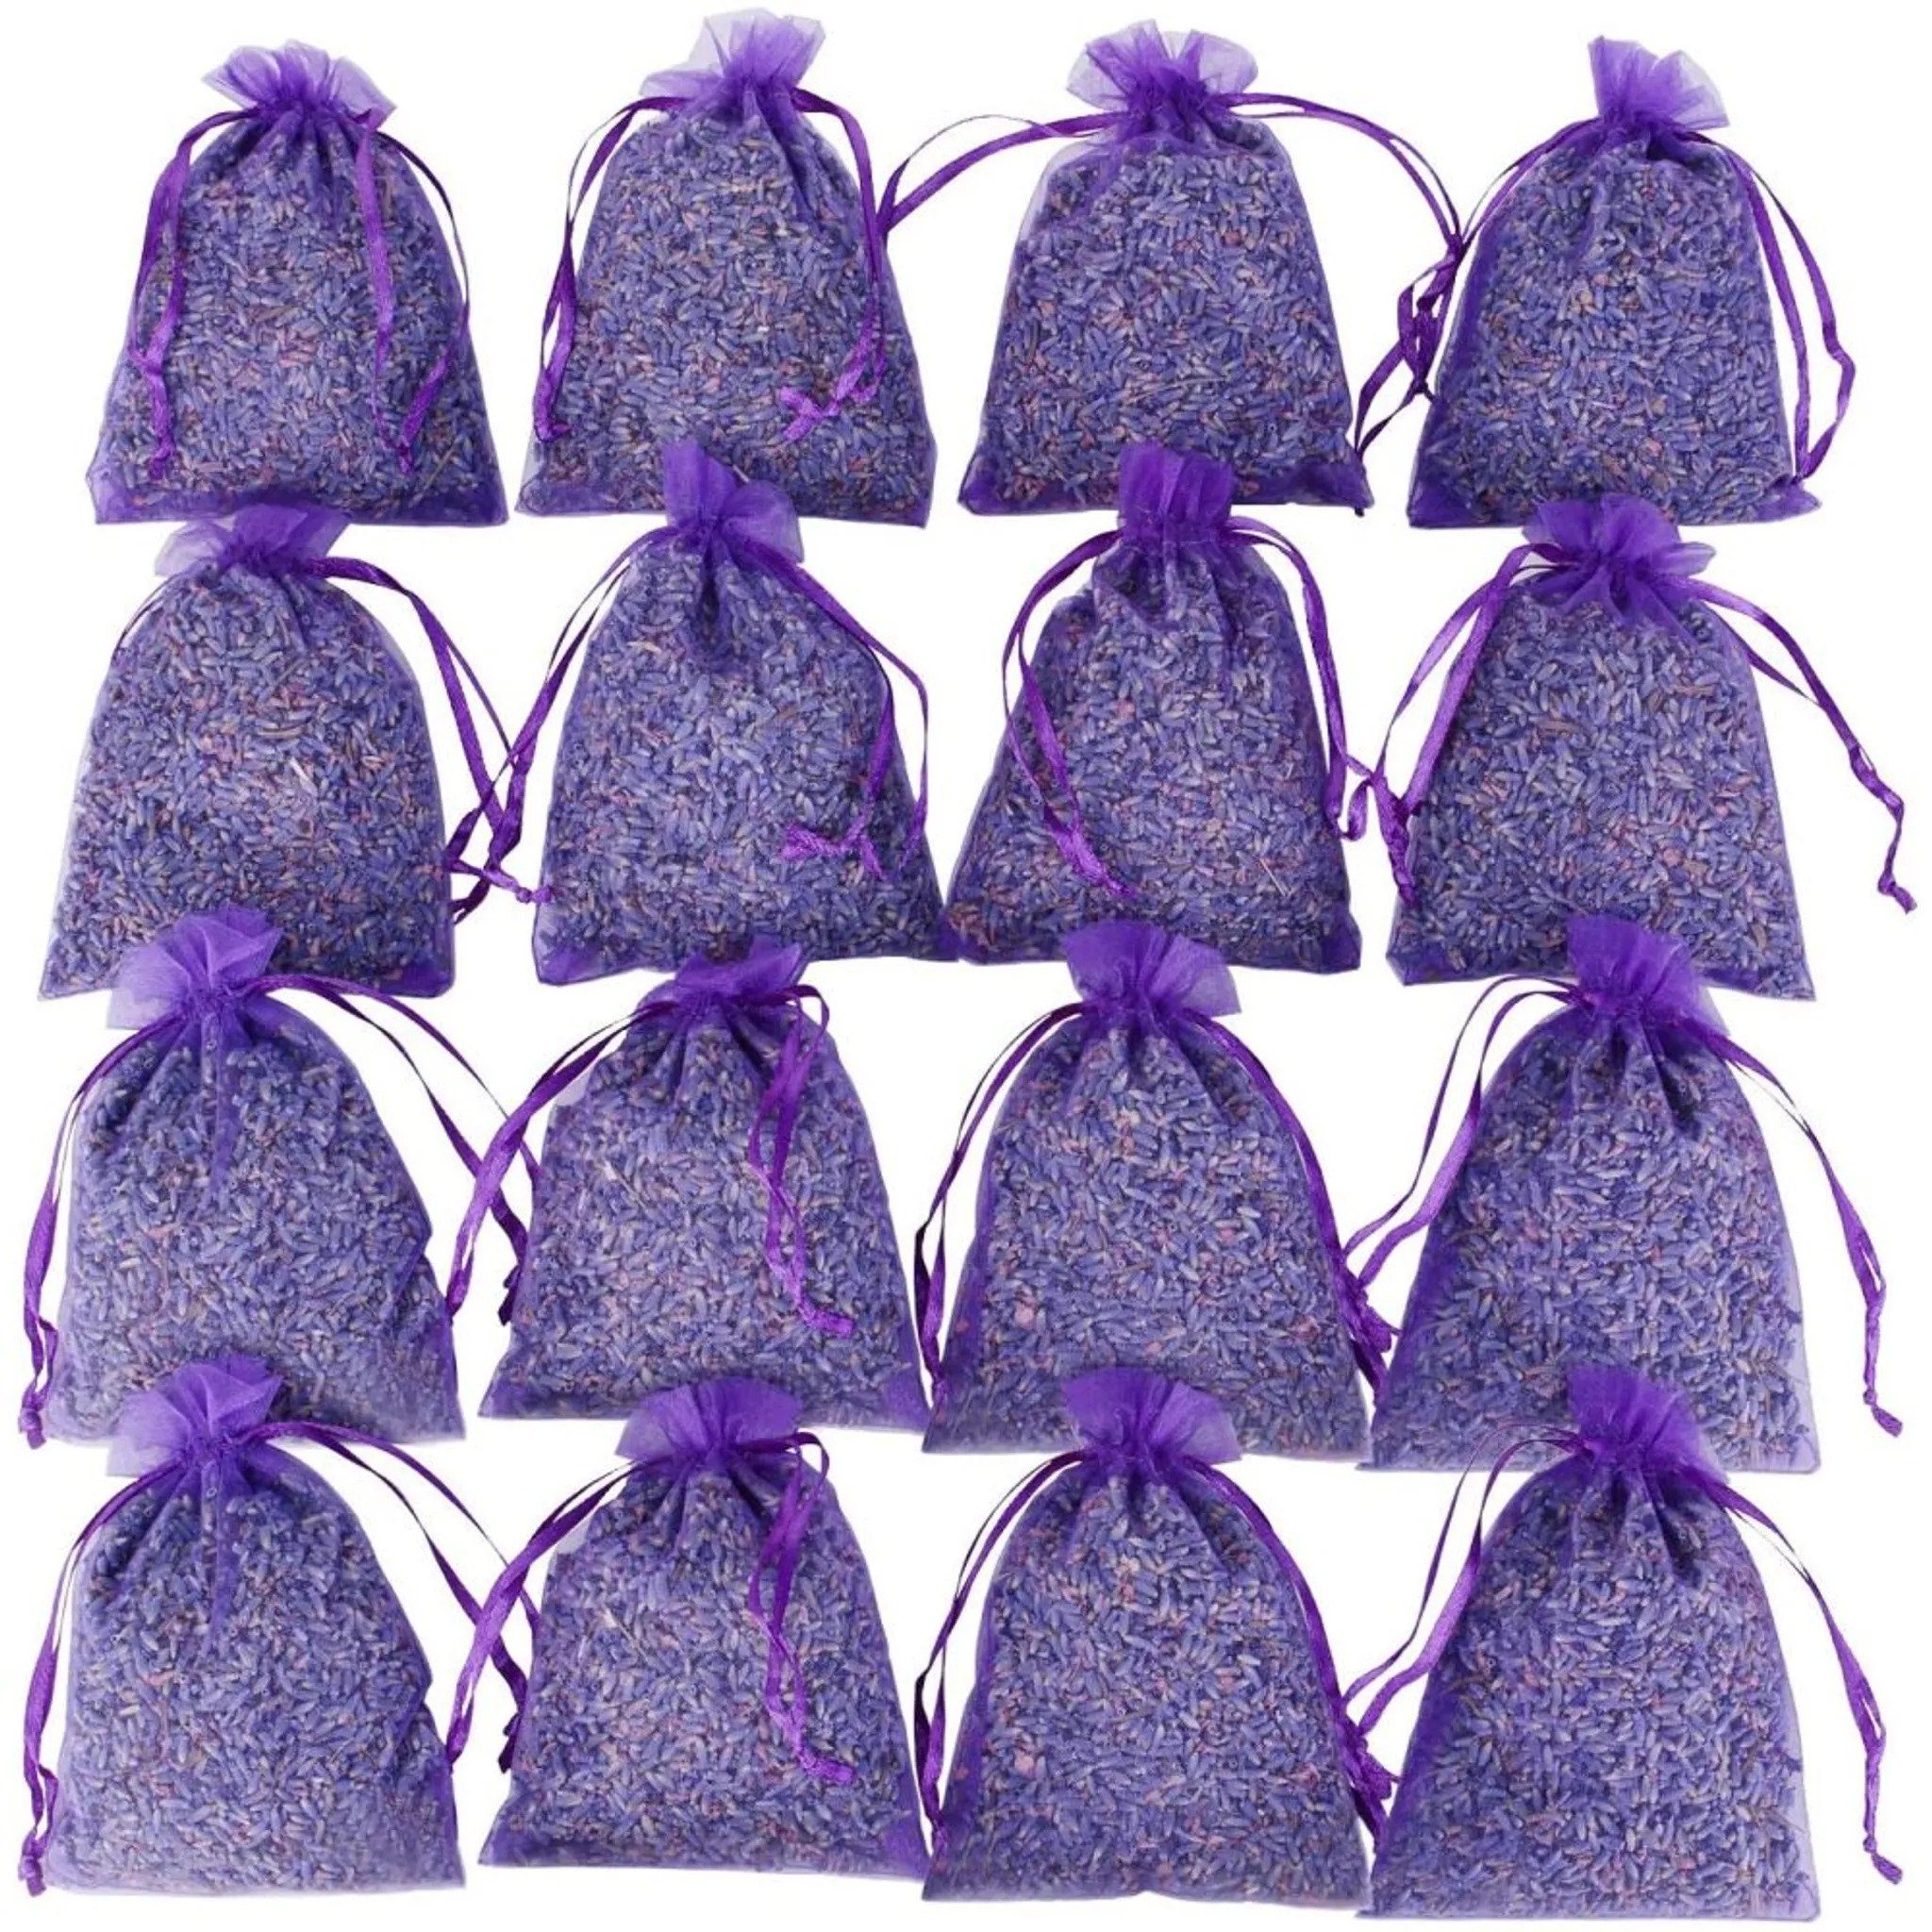 Duftbeutel Duftsäckchen Lavendel TUABUR Lavendel 16 getrocknet Duftsäckchen: